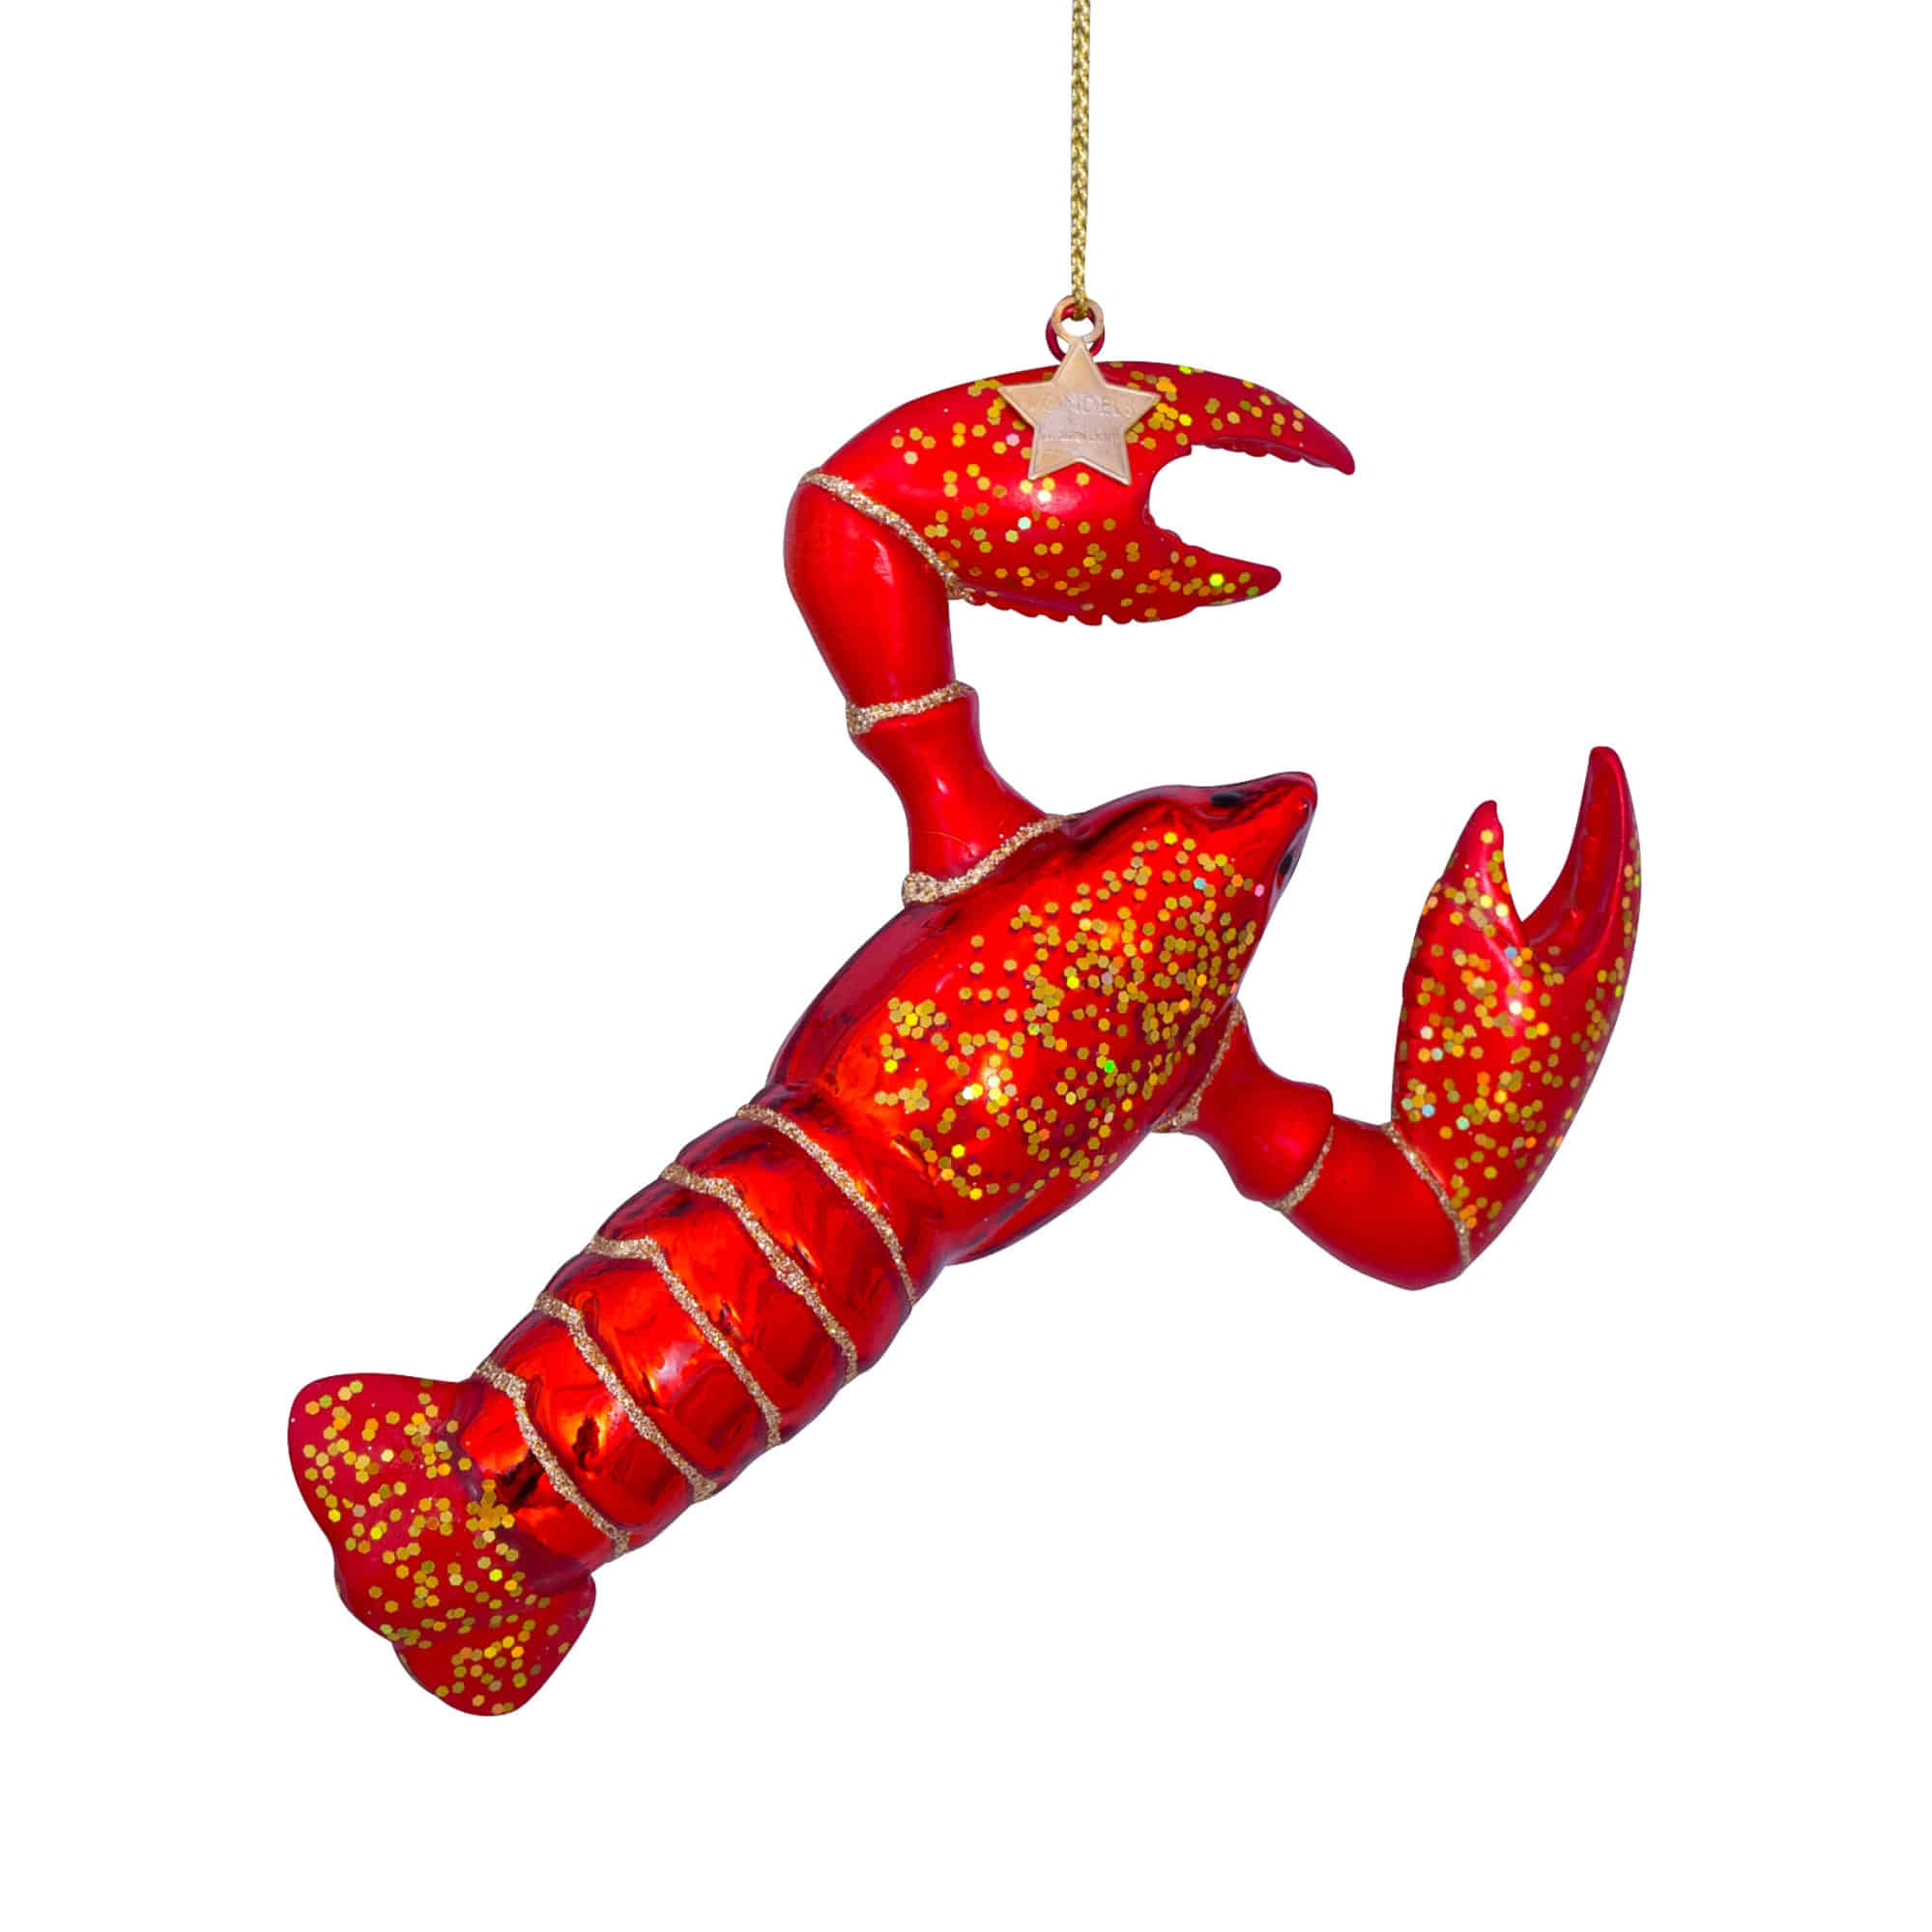 VONDELS Ornament Glass Red Lobster